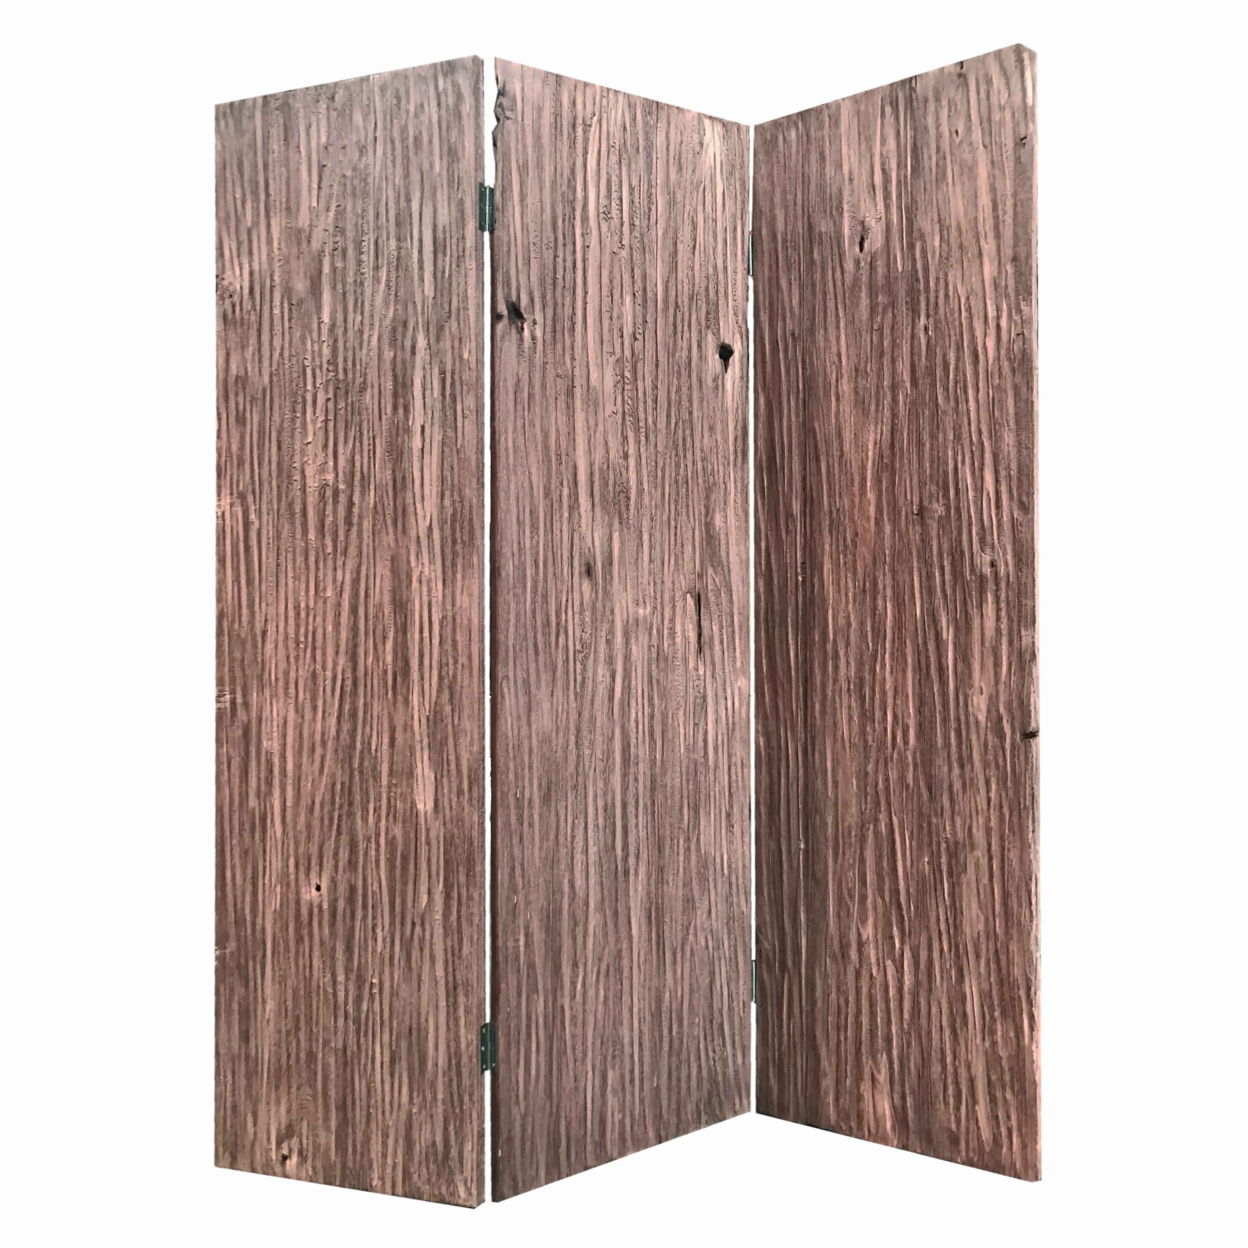 Textured And Bark Designed Wooden 3 Panel Room Divider , Natural Brown- Saltoro Sherpi